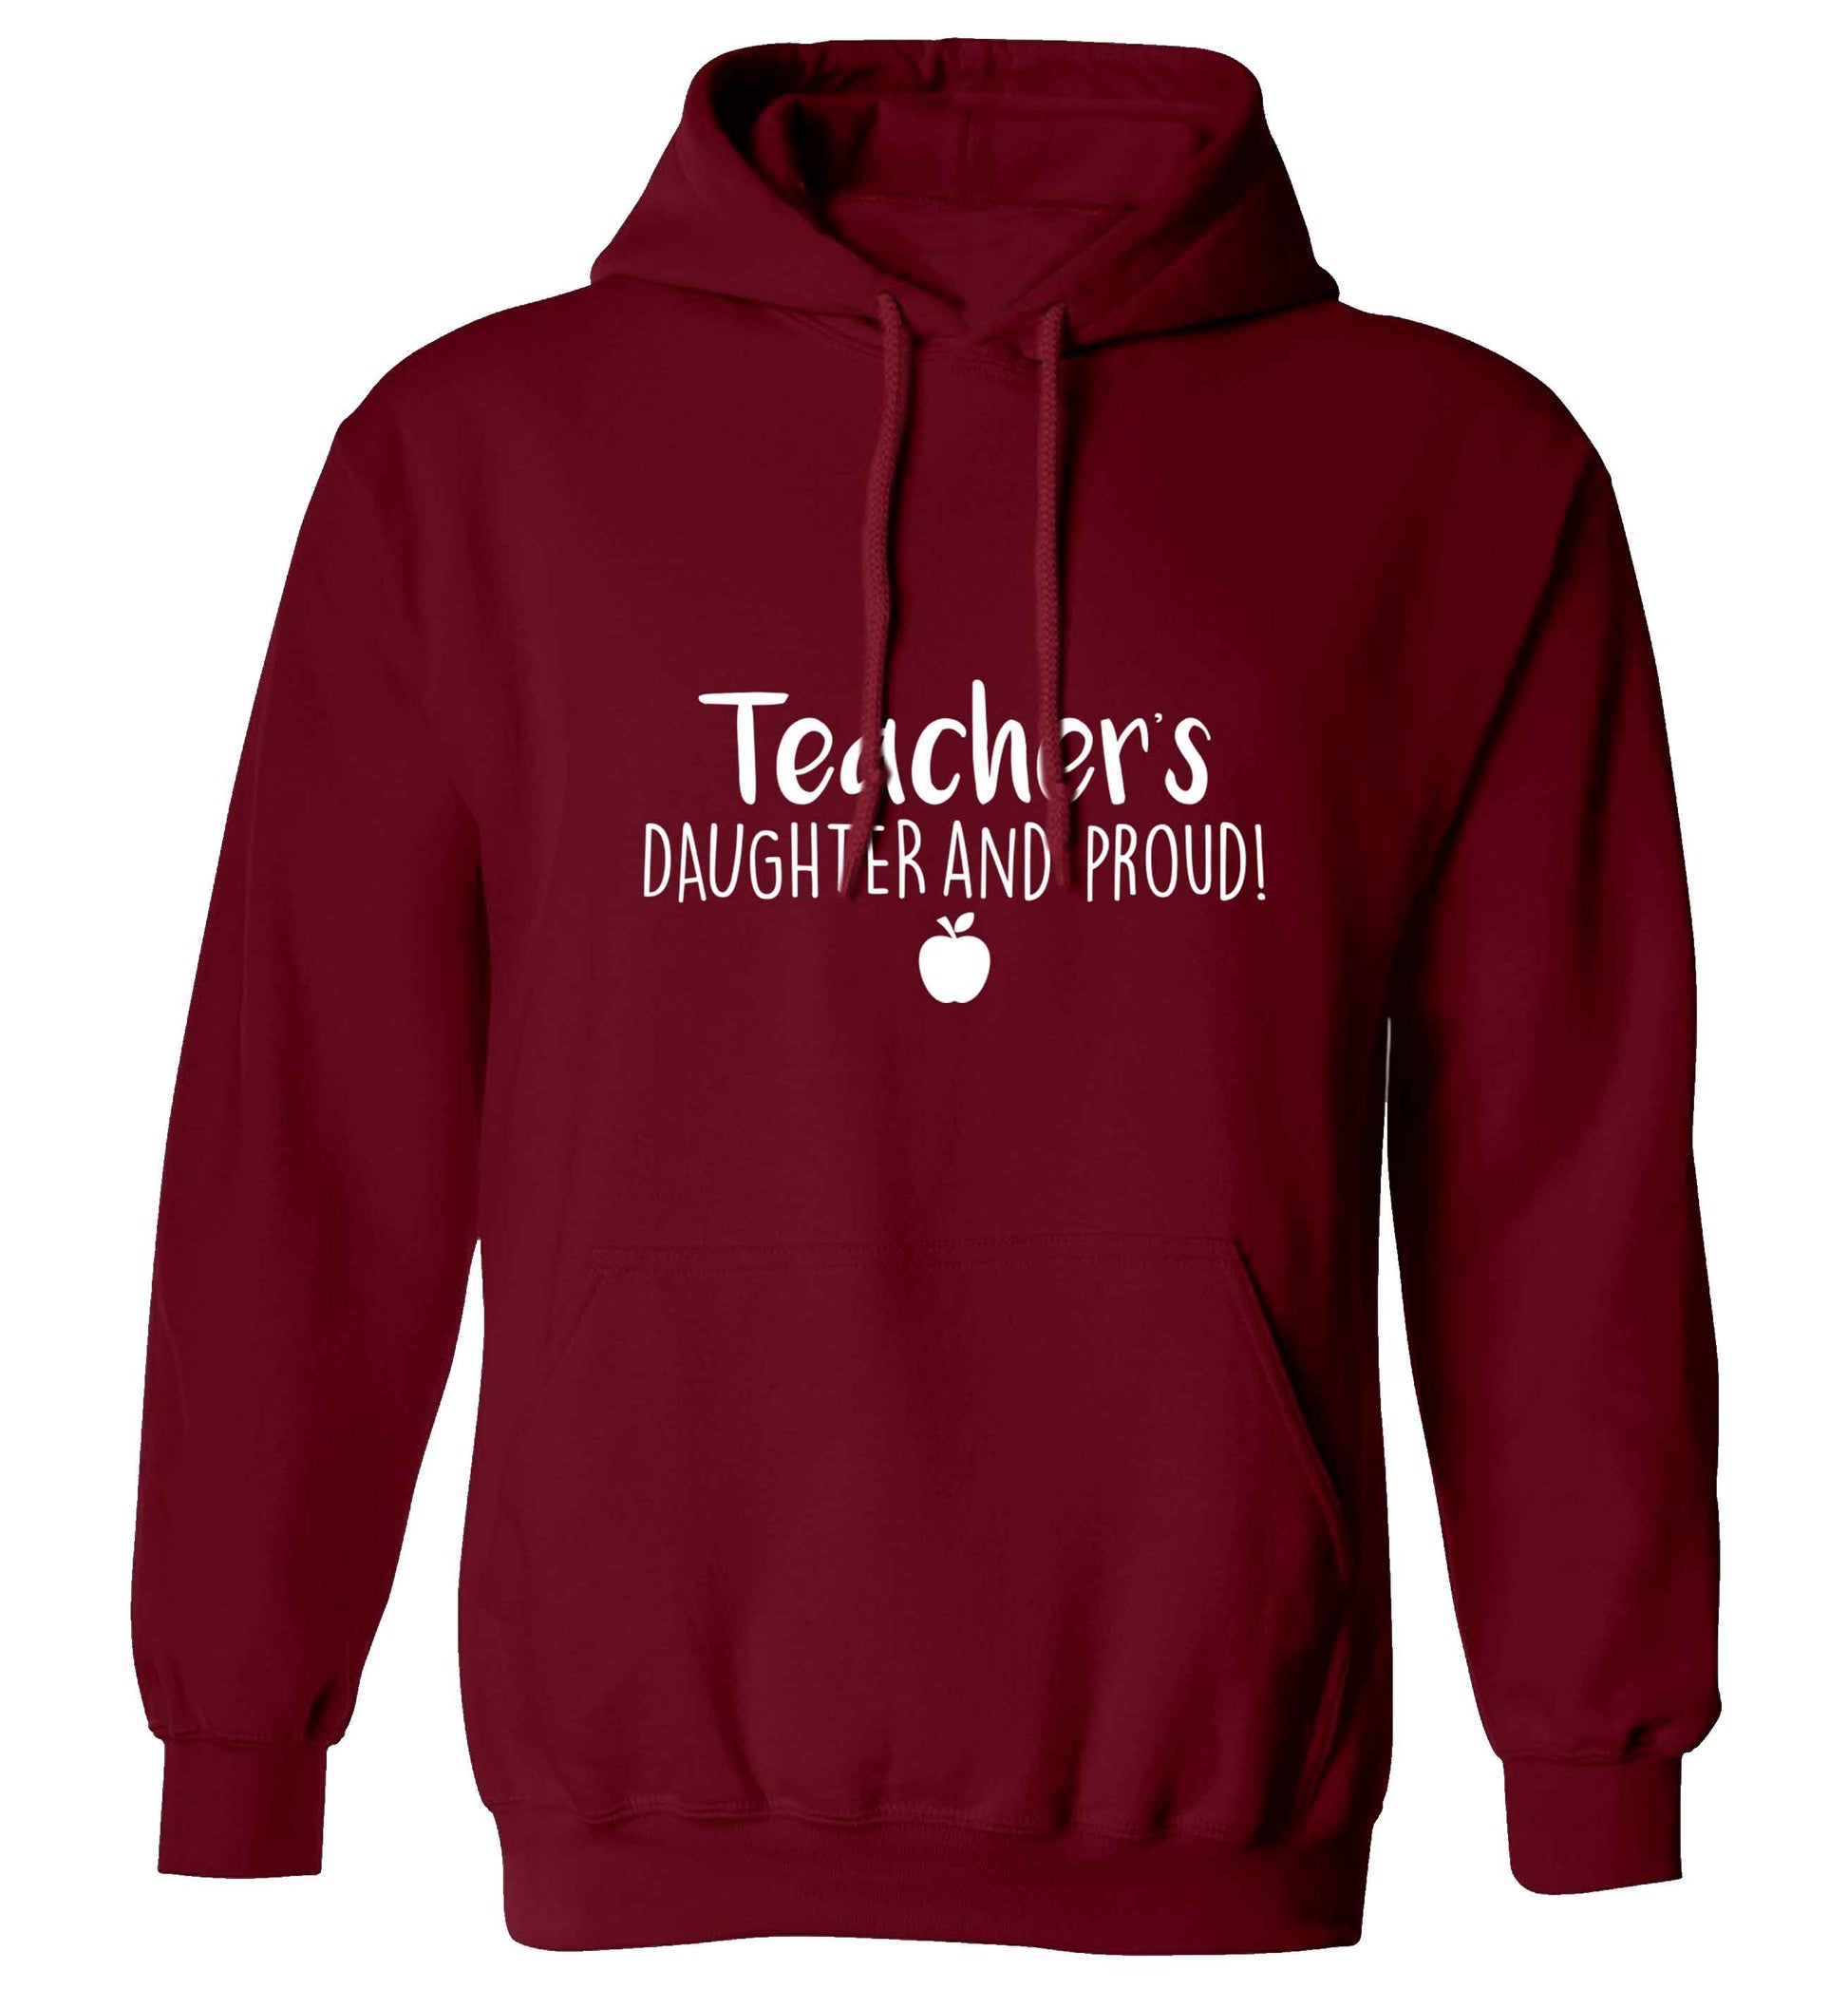 Teachers daughter and proud adults unisex maroon hoodie 2XL